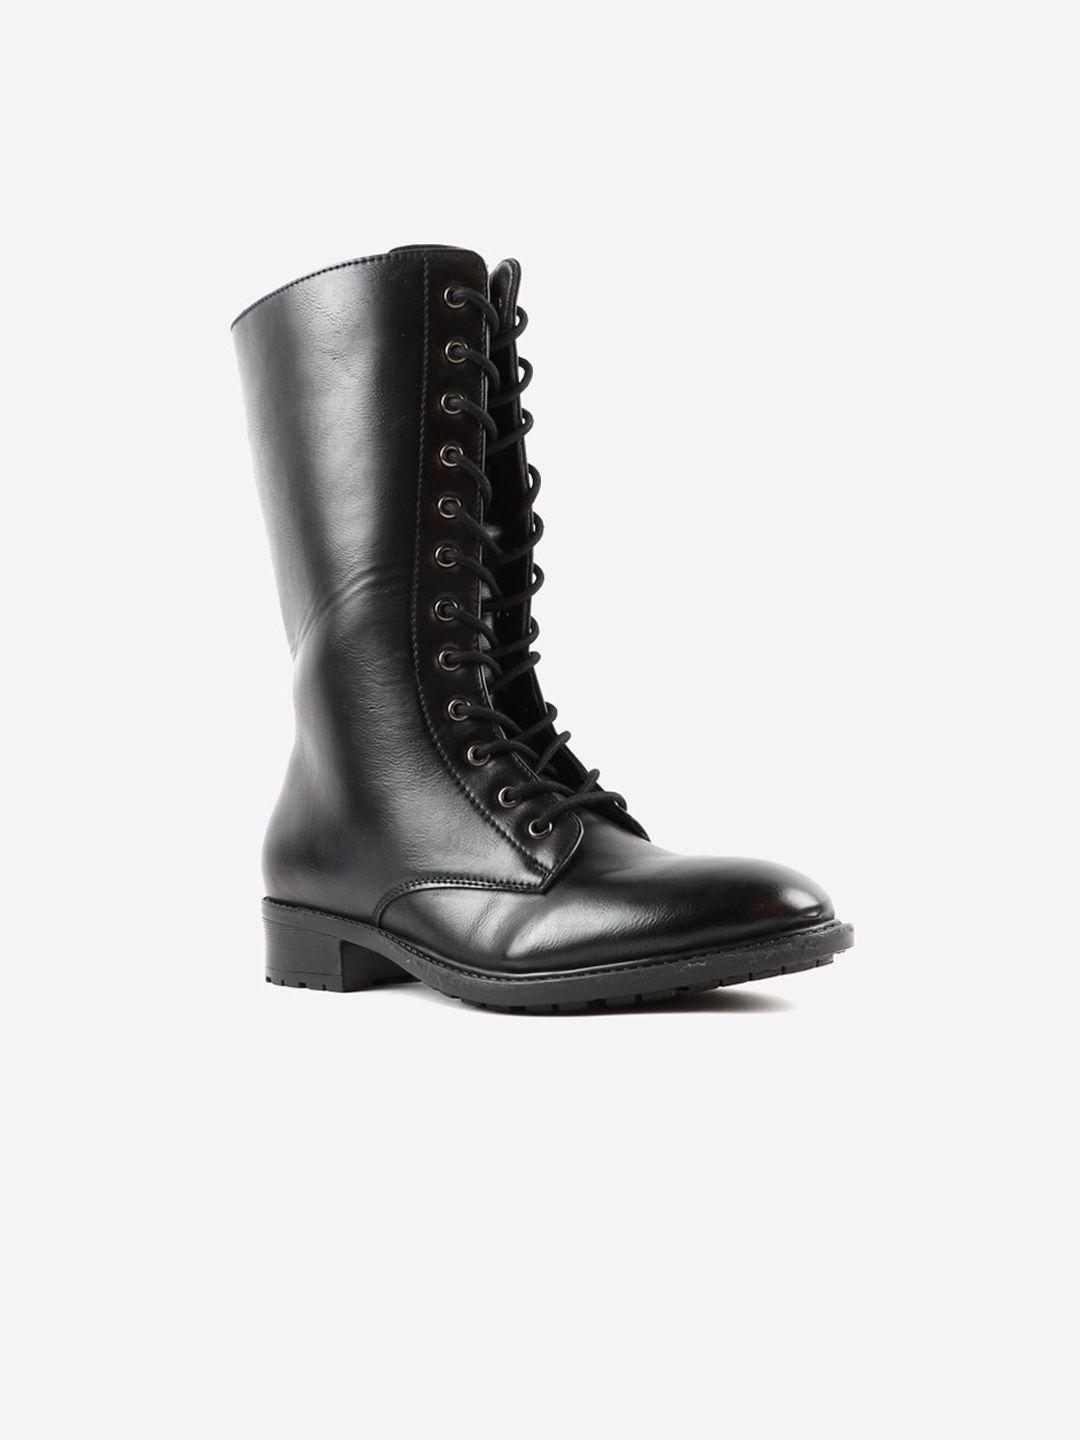 carlton london women black high-top flat boots